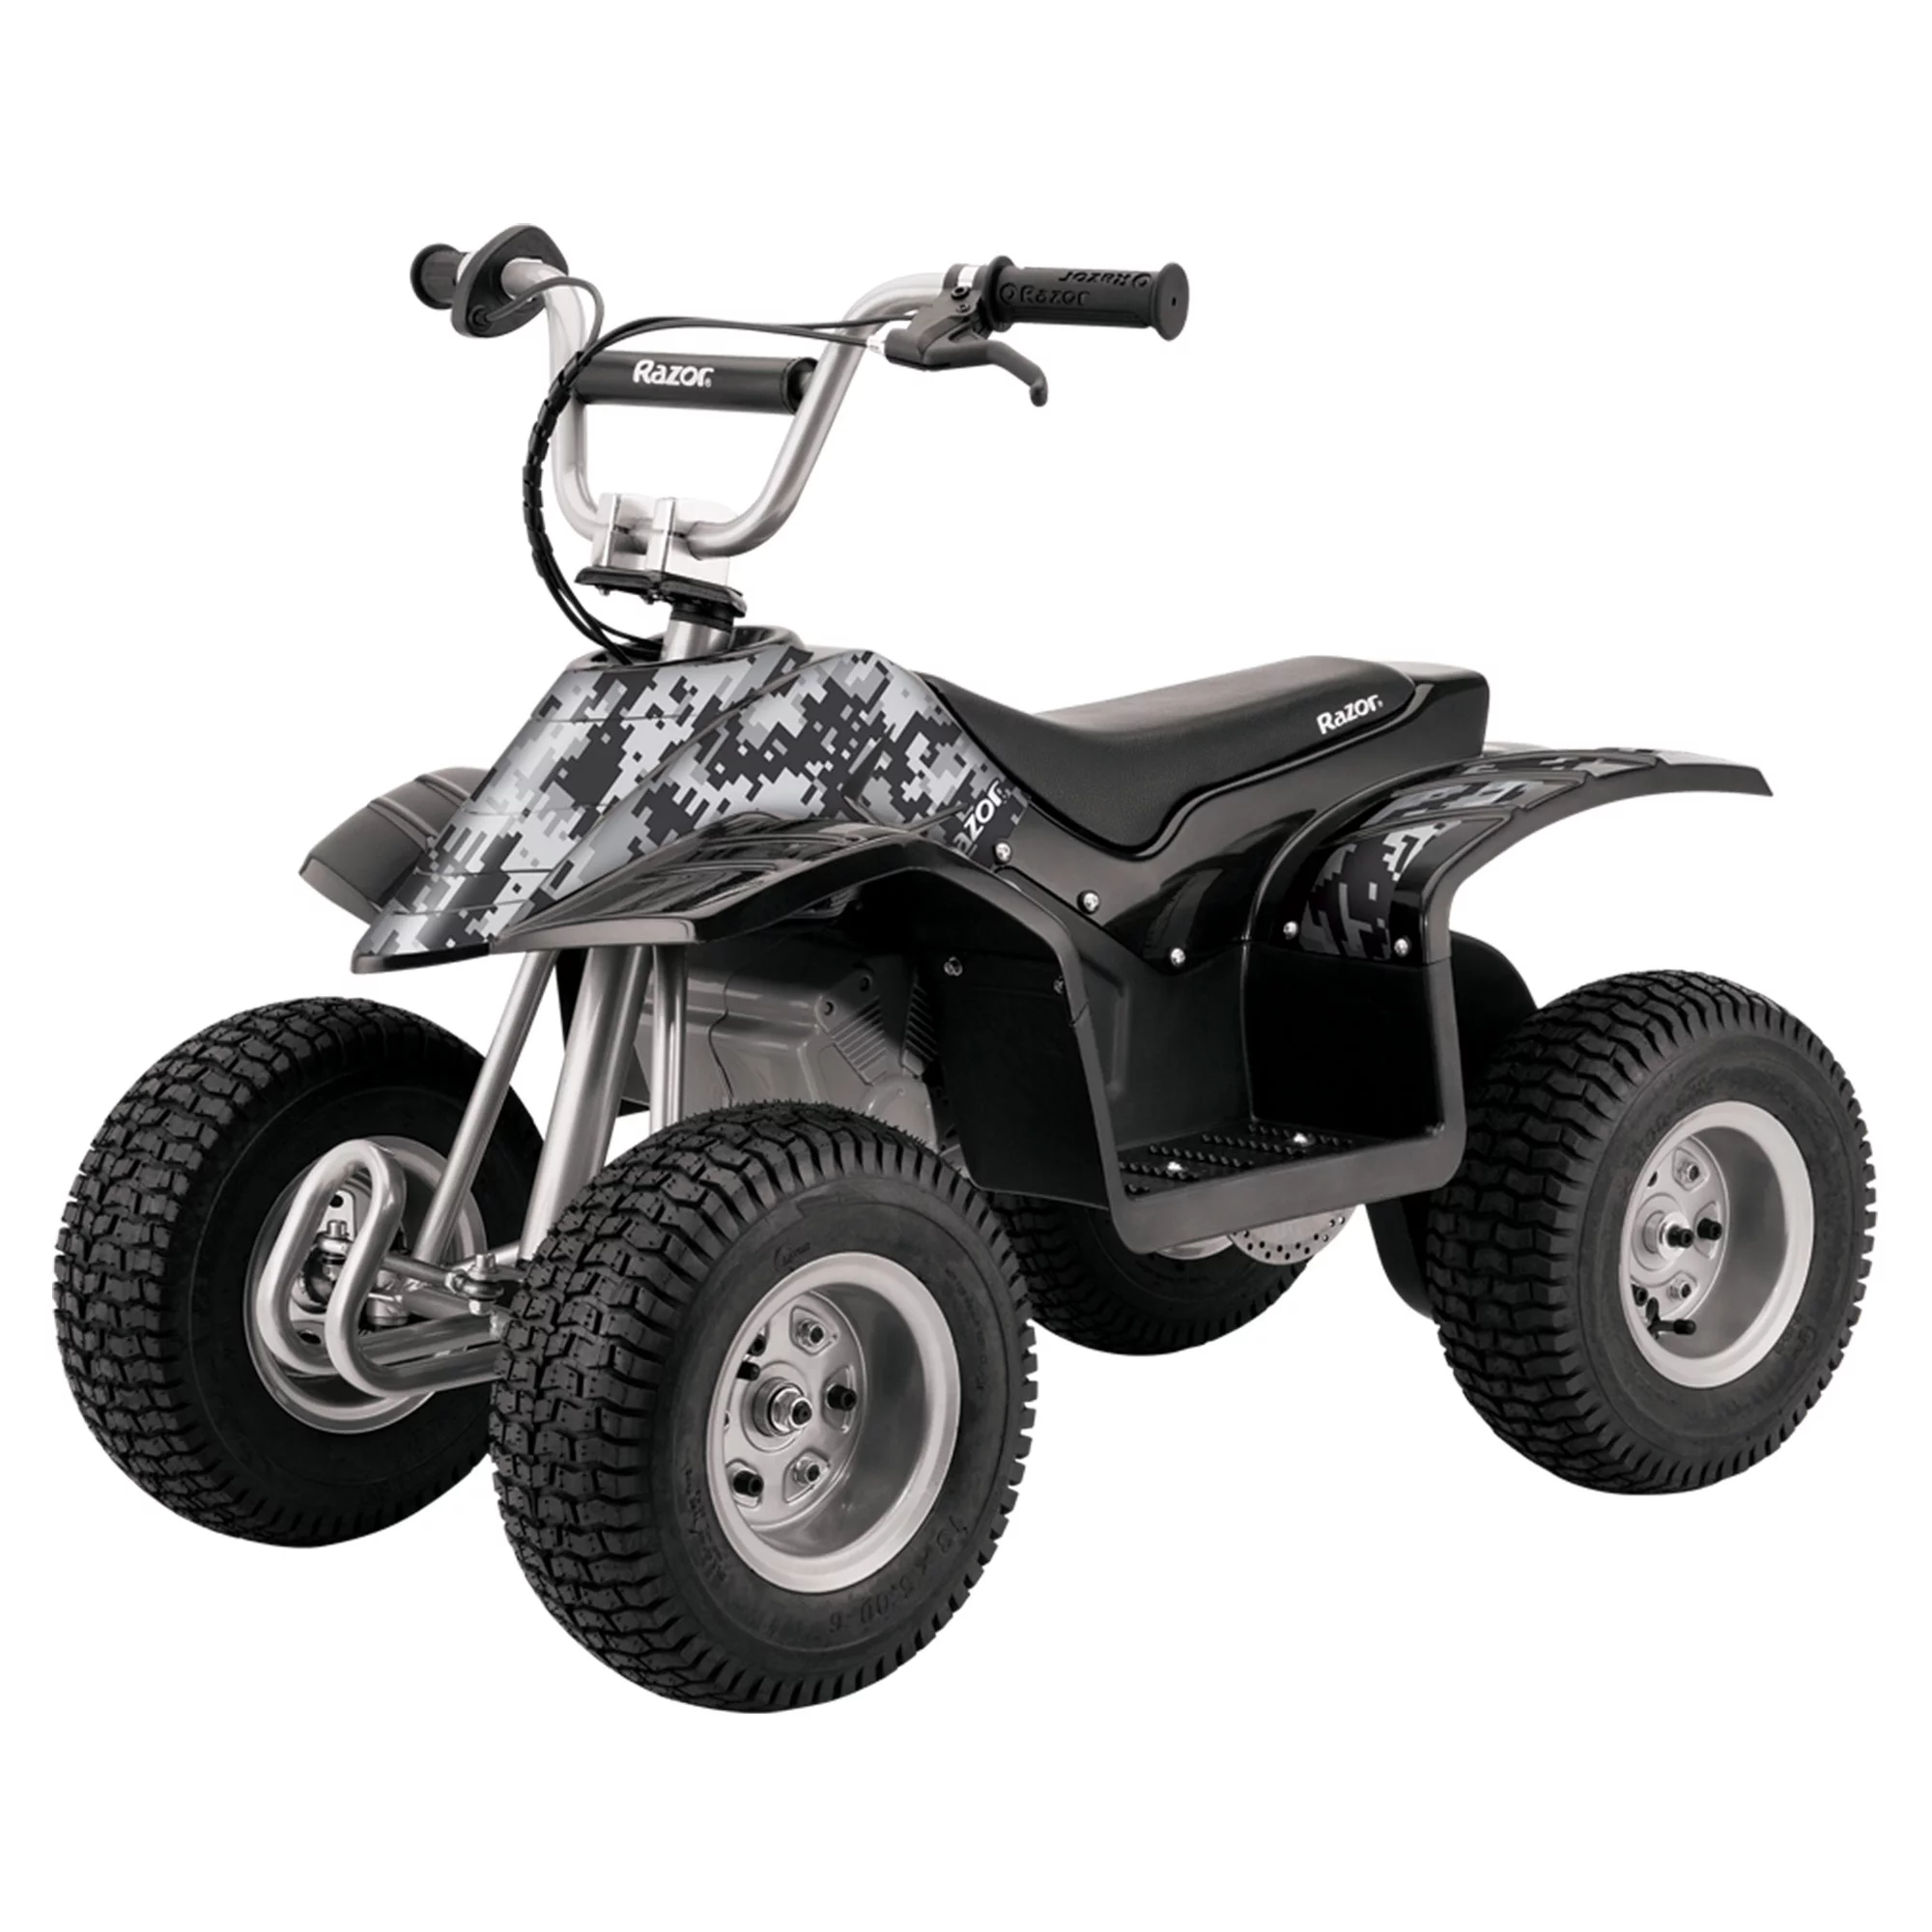 Razor Dirt Quad - 24V Powered Ride-On, 12" Knobby Air-Filled Tires, Electric 4-Wheeler for Kids 8+